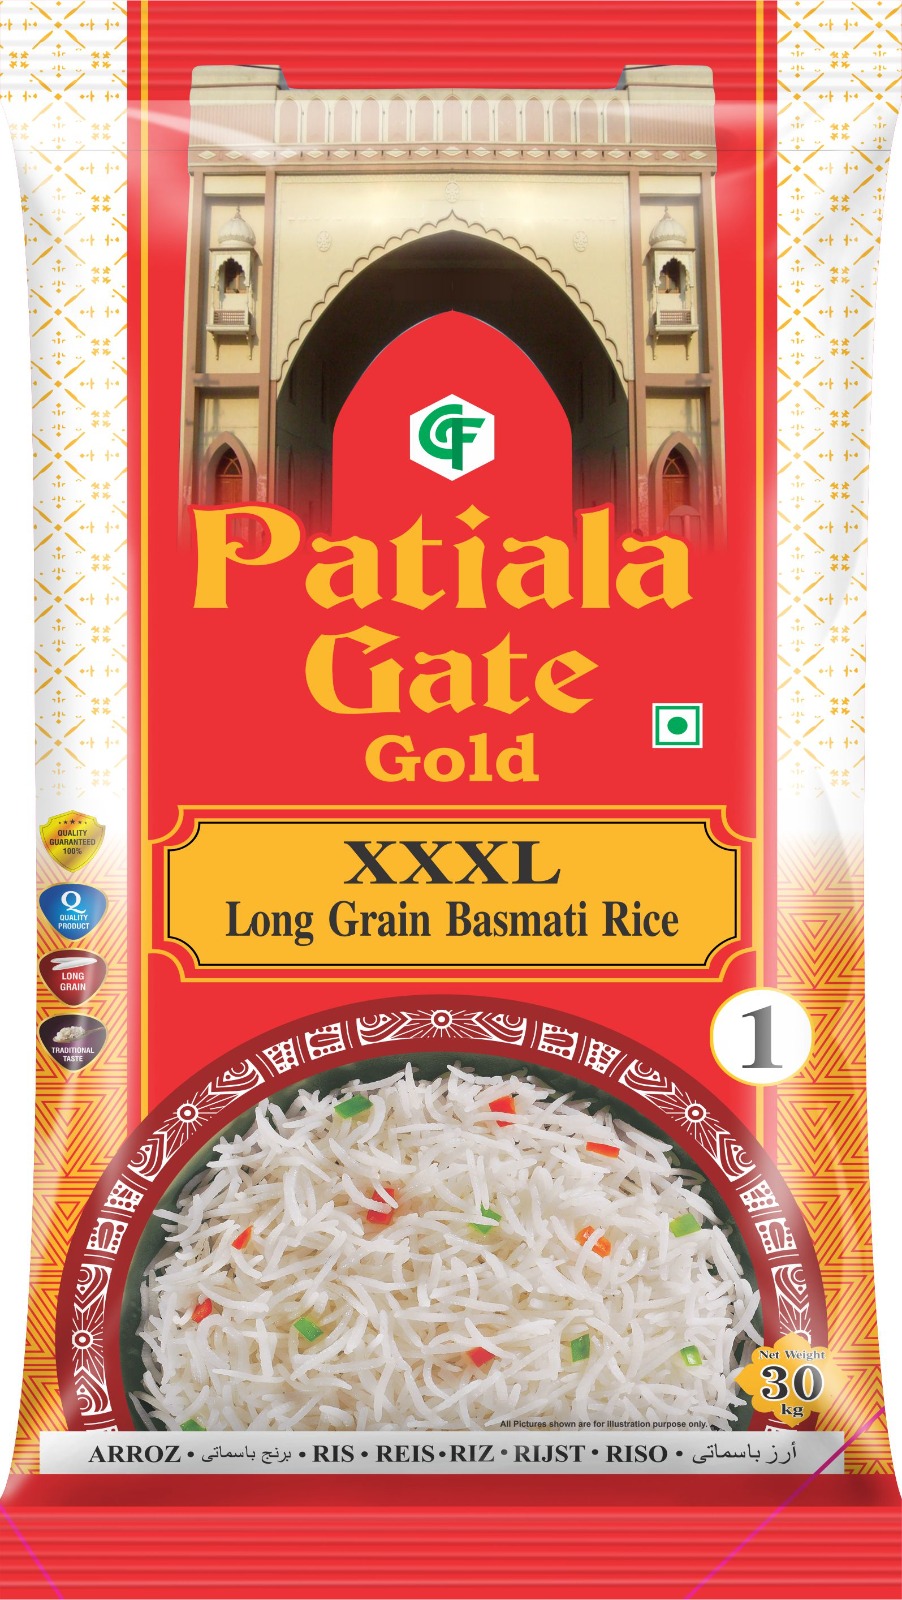 1121 Rice(xxxl long grain Basmati rice)